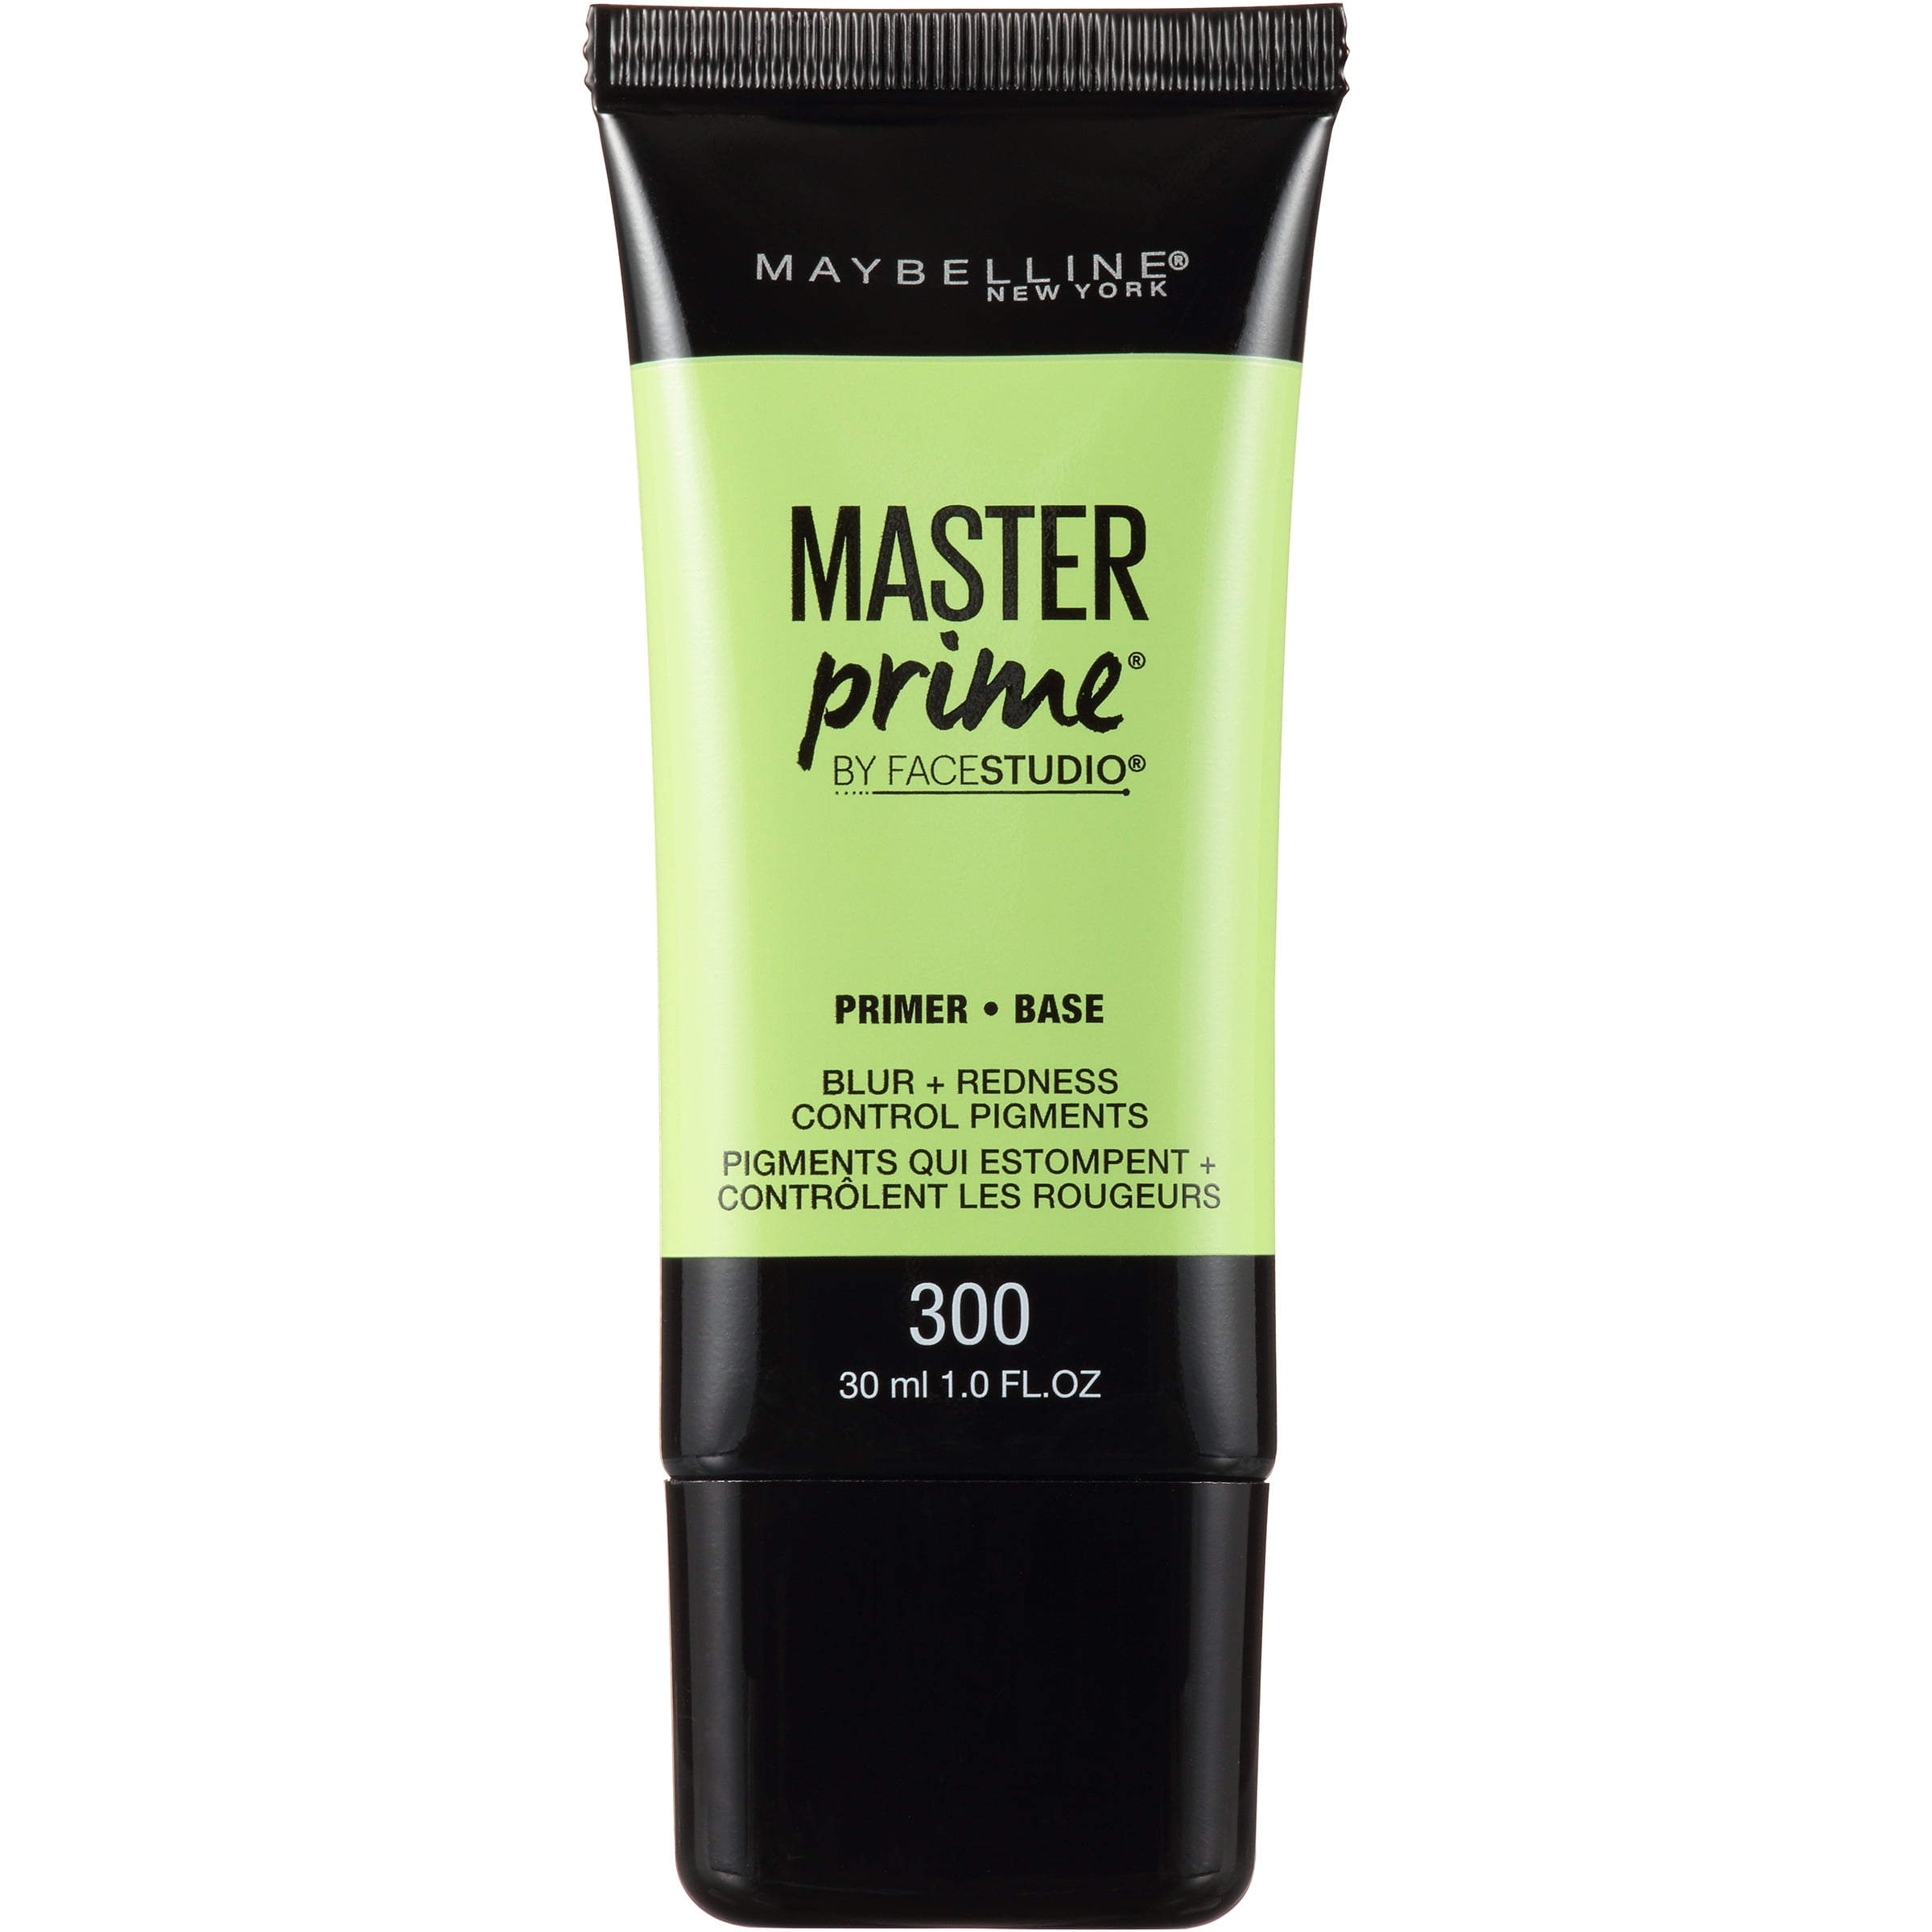 Maybelline Facestudio Master Prime Primer Makeup, Blur and Redness Control Pigments, 1 fl oz